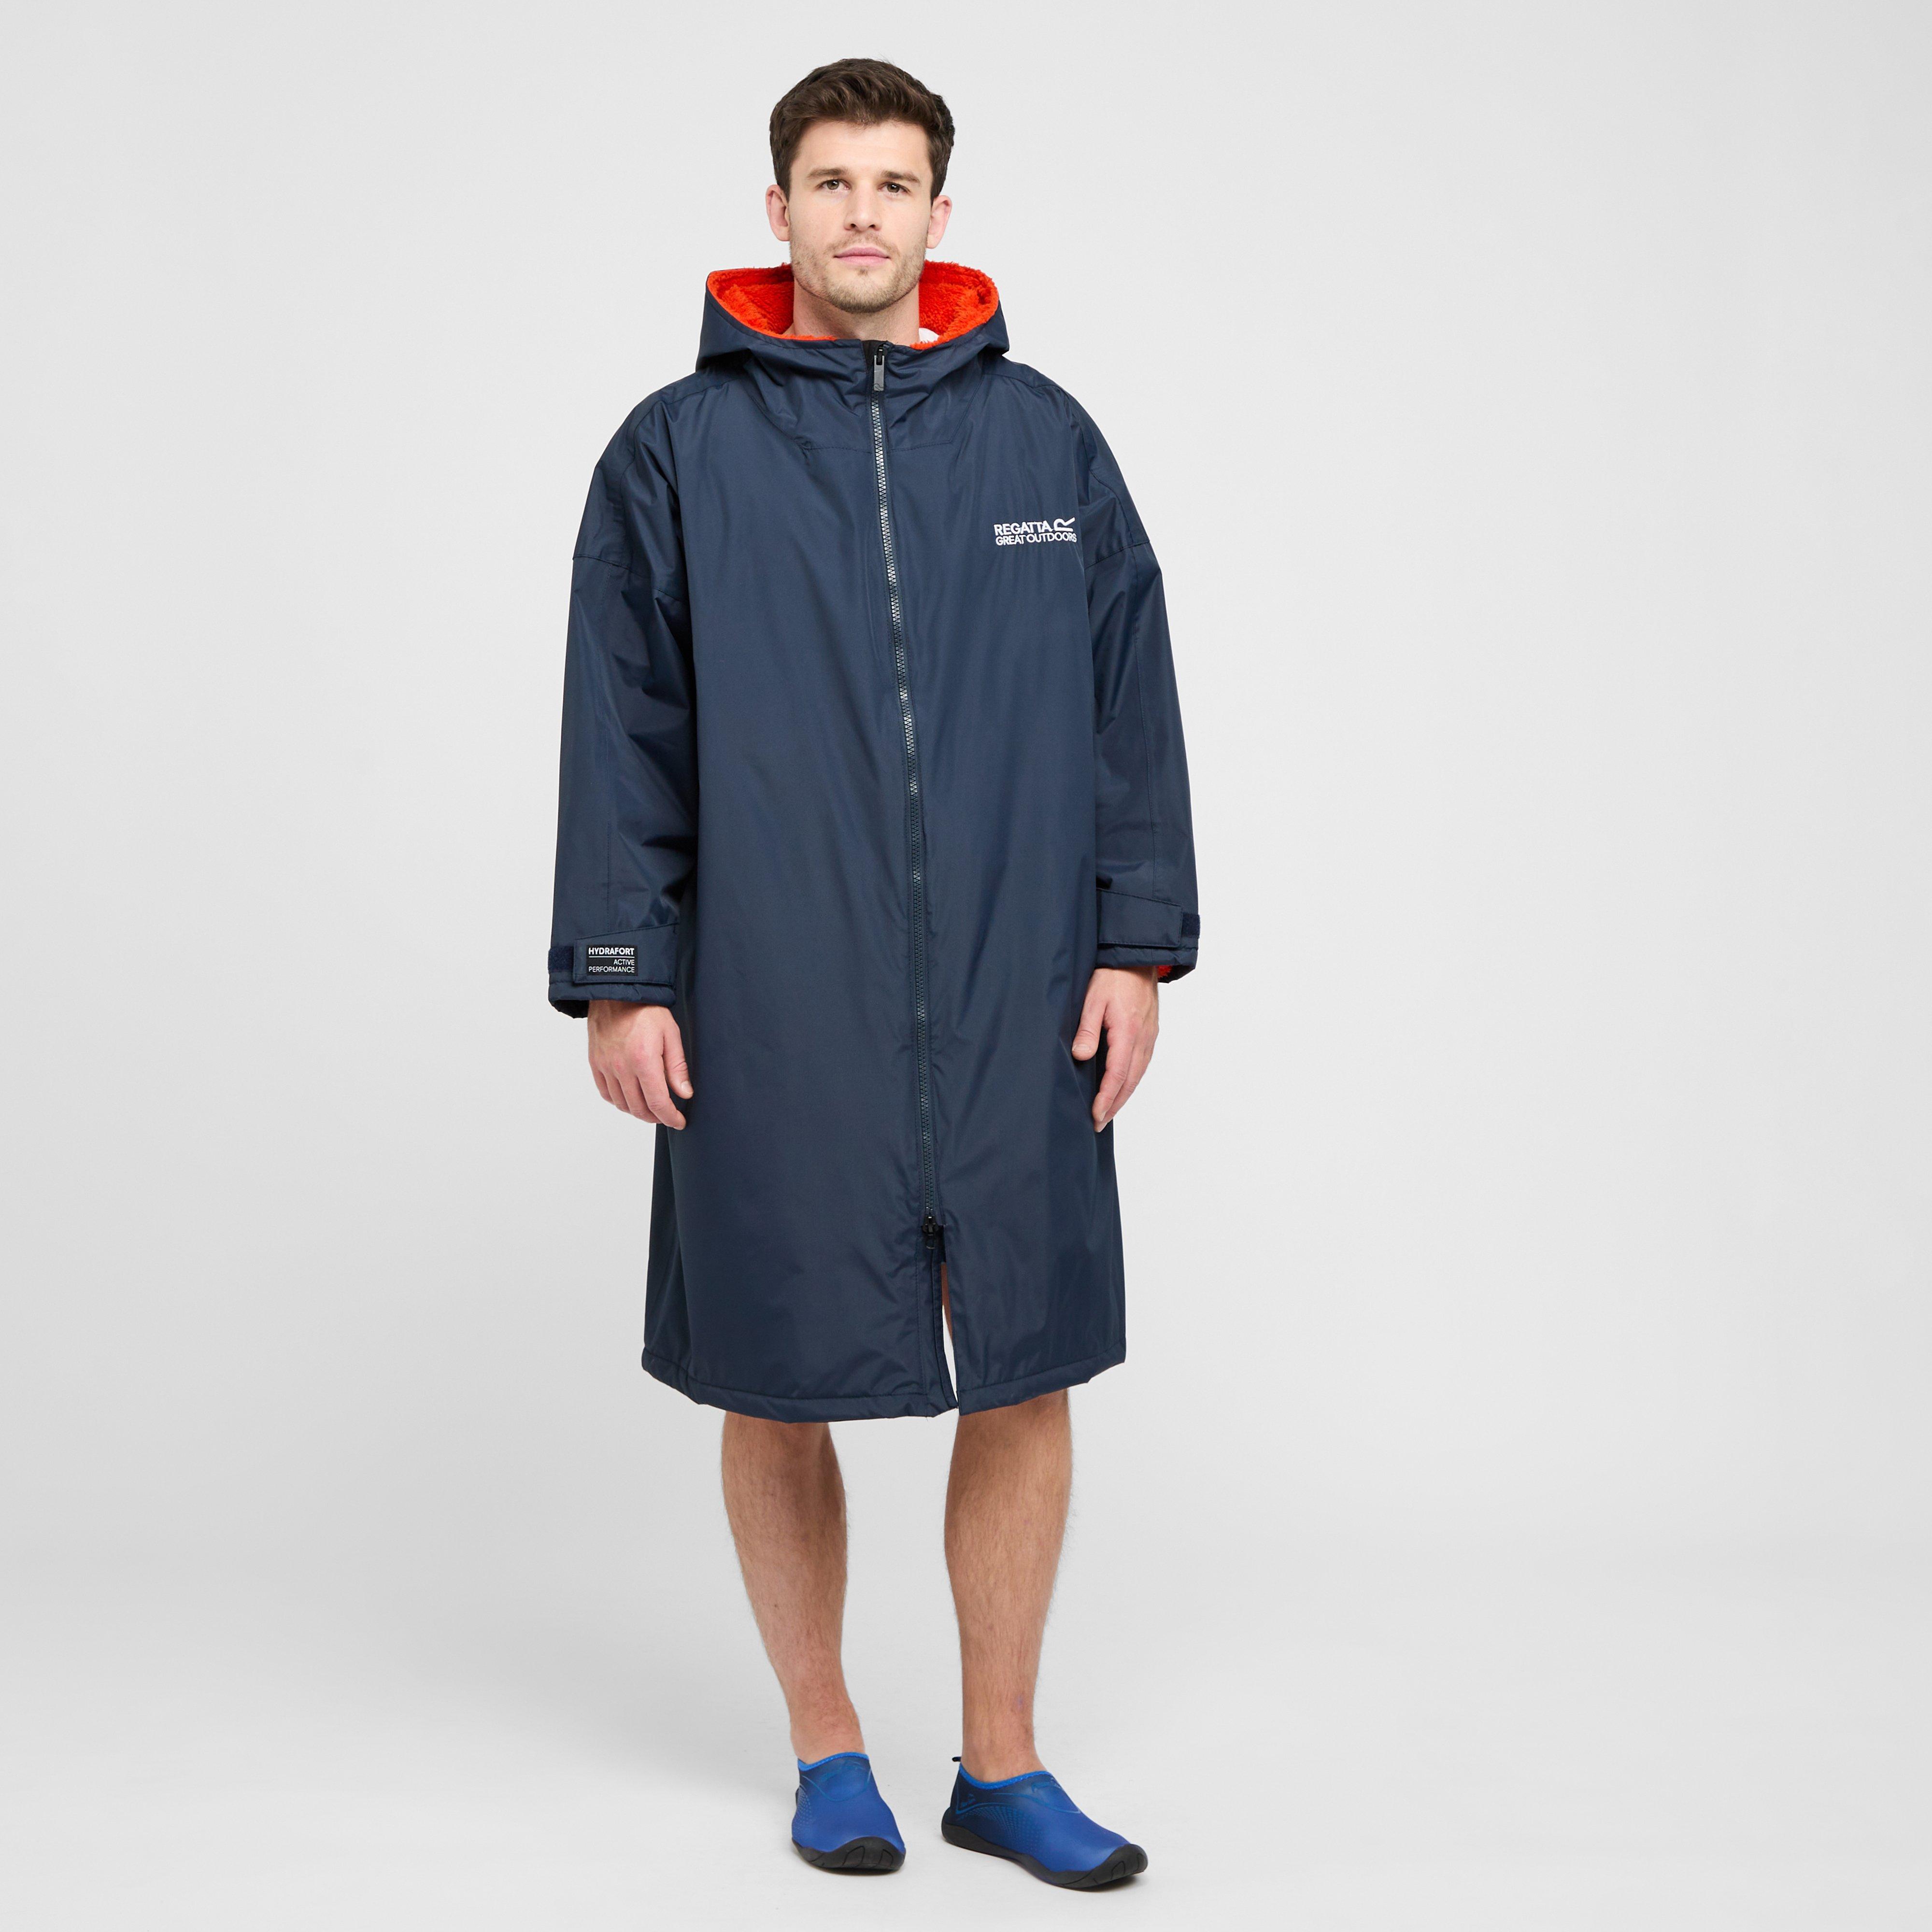  Regatta Adults Waterproof Robe Navy